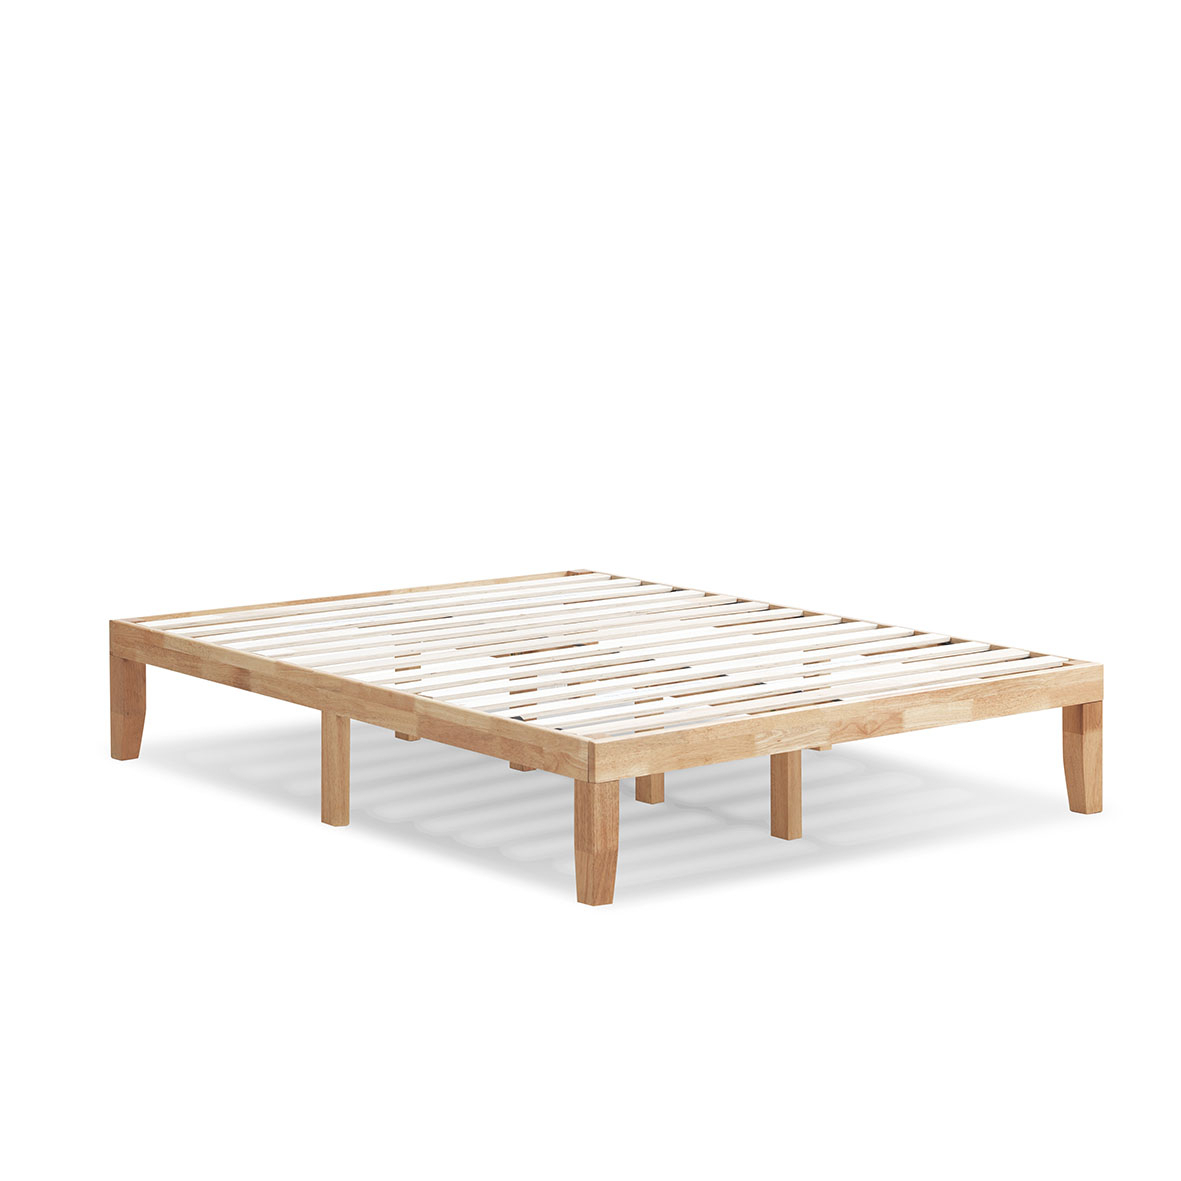 14'' Queen Size Wooden Platform Bed Frame W/ Strong Slat Support - Natural